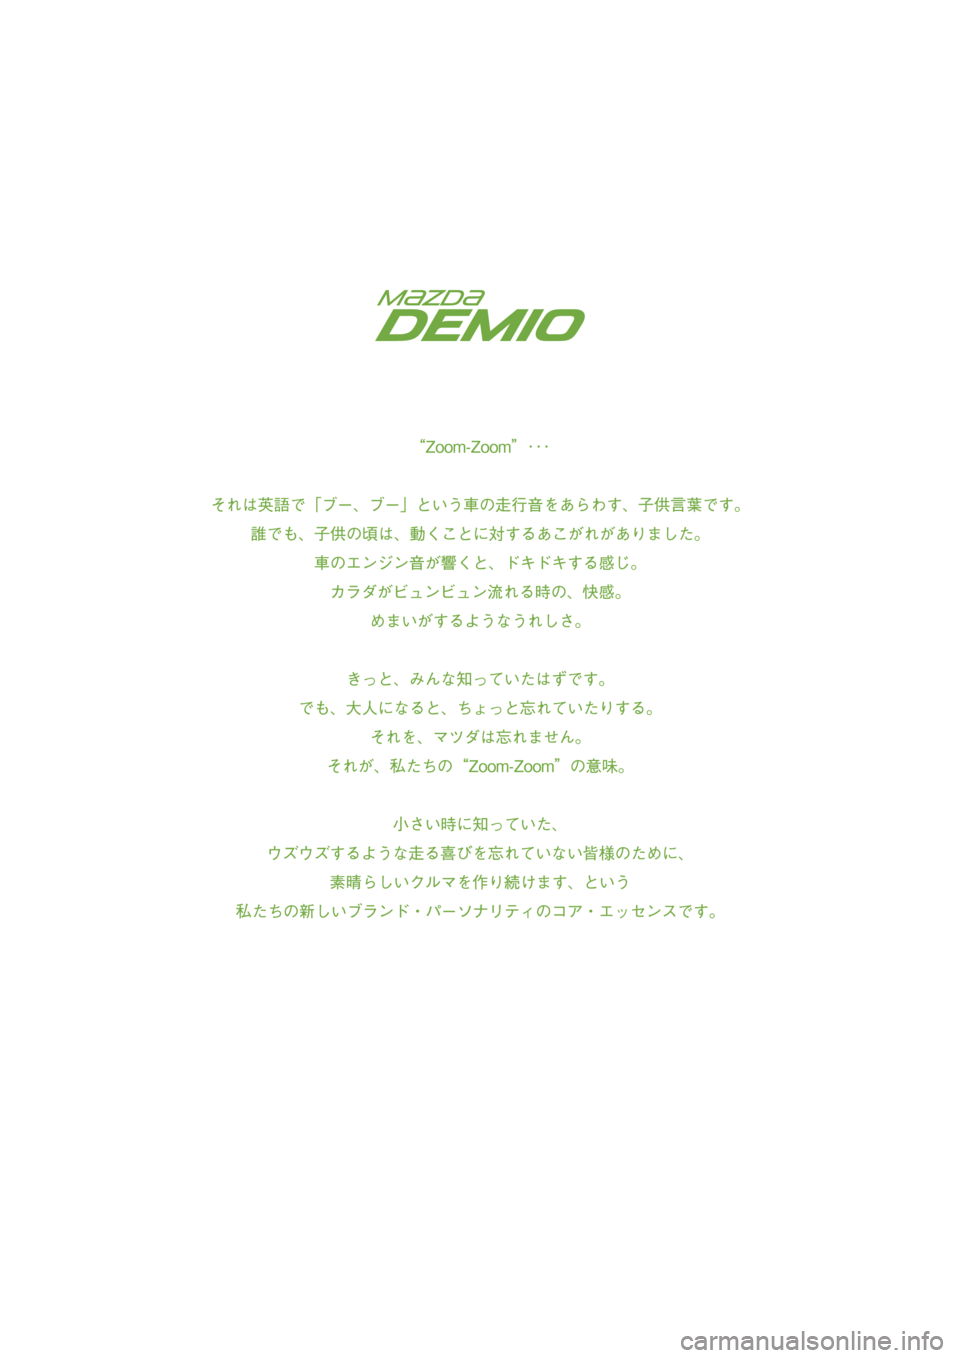 MAZDA MODEL DEMIO 2018   取扱説明書 (デミオ) (in Japanese) DEMIO_Dコ_Edition3_QuickGuide.indb   1DEMIO_Dコ_Edition3_QuickGuide.indb   12017/03/31   16:03:582017/03/31   16:03:58 